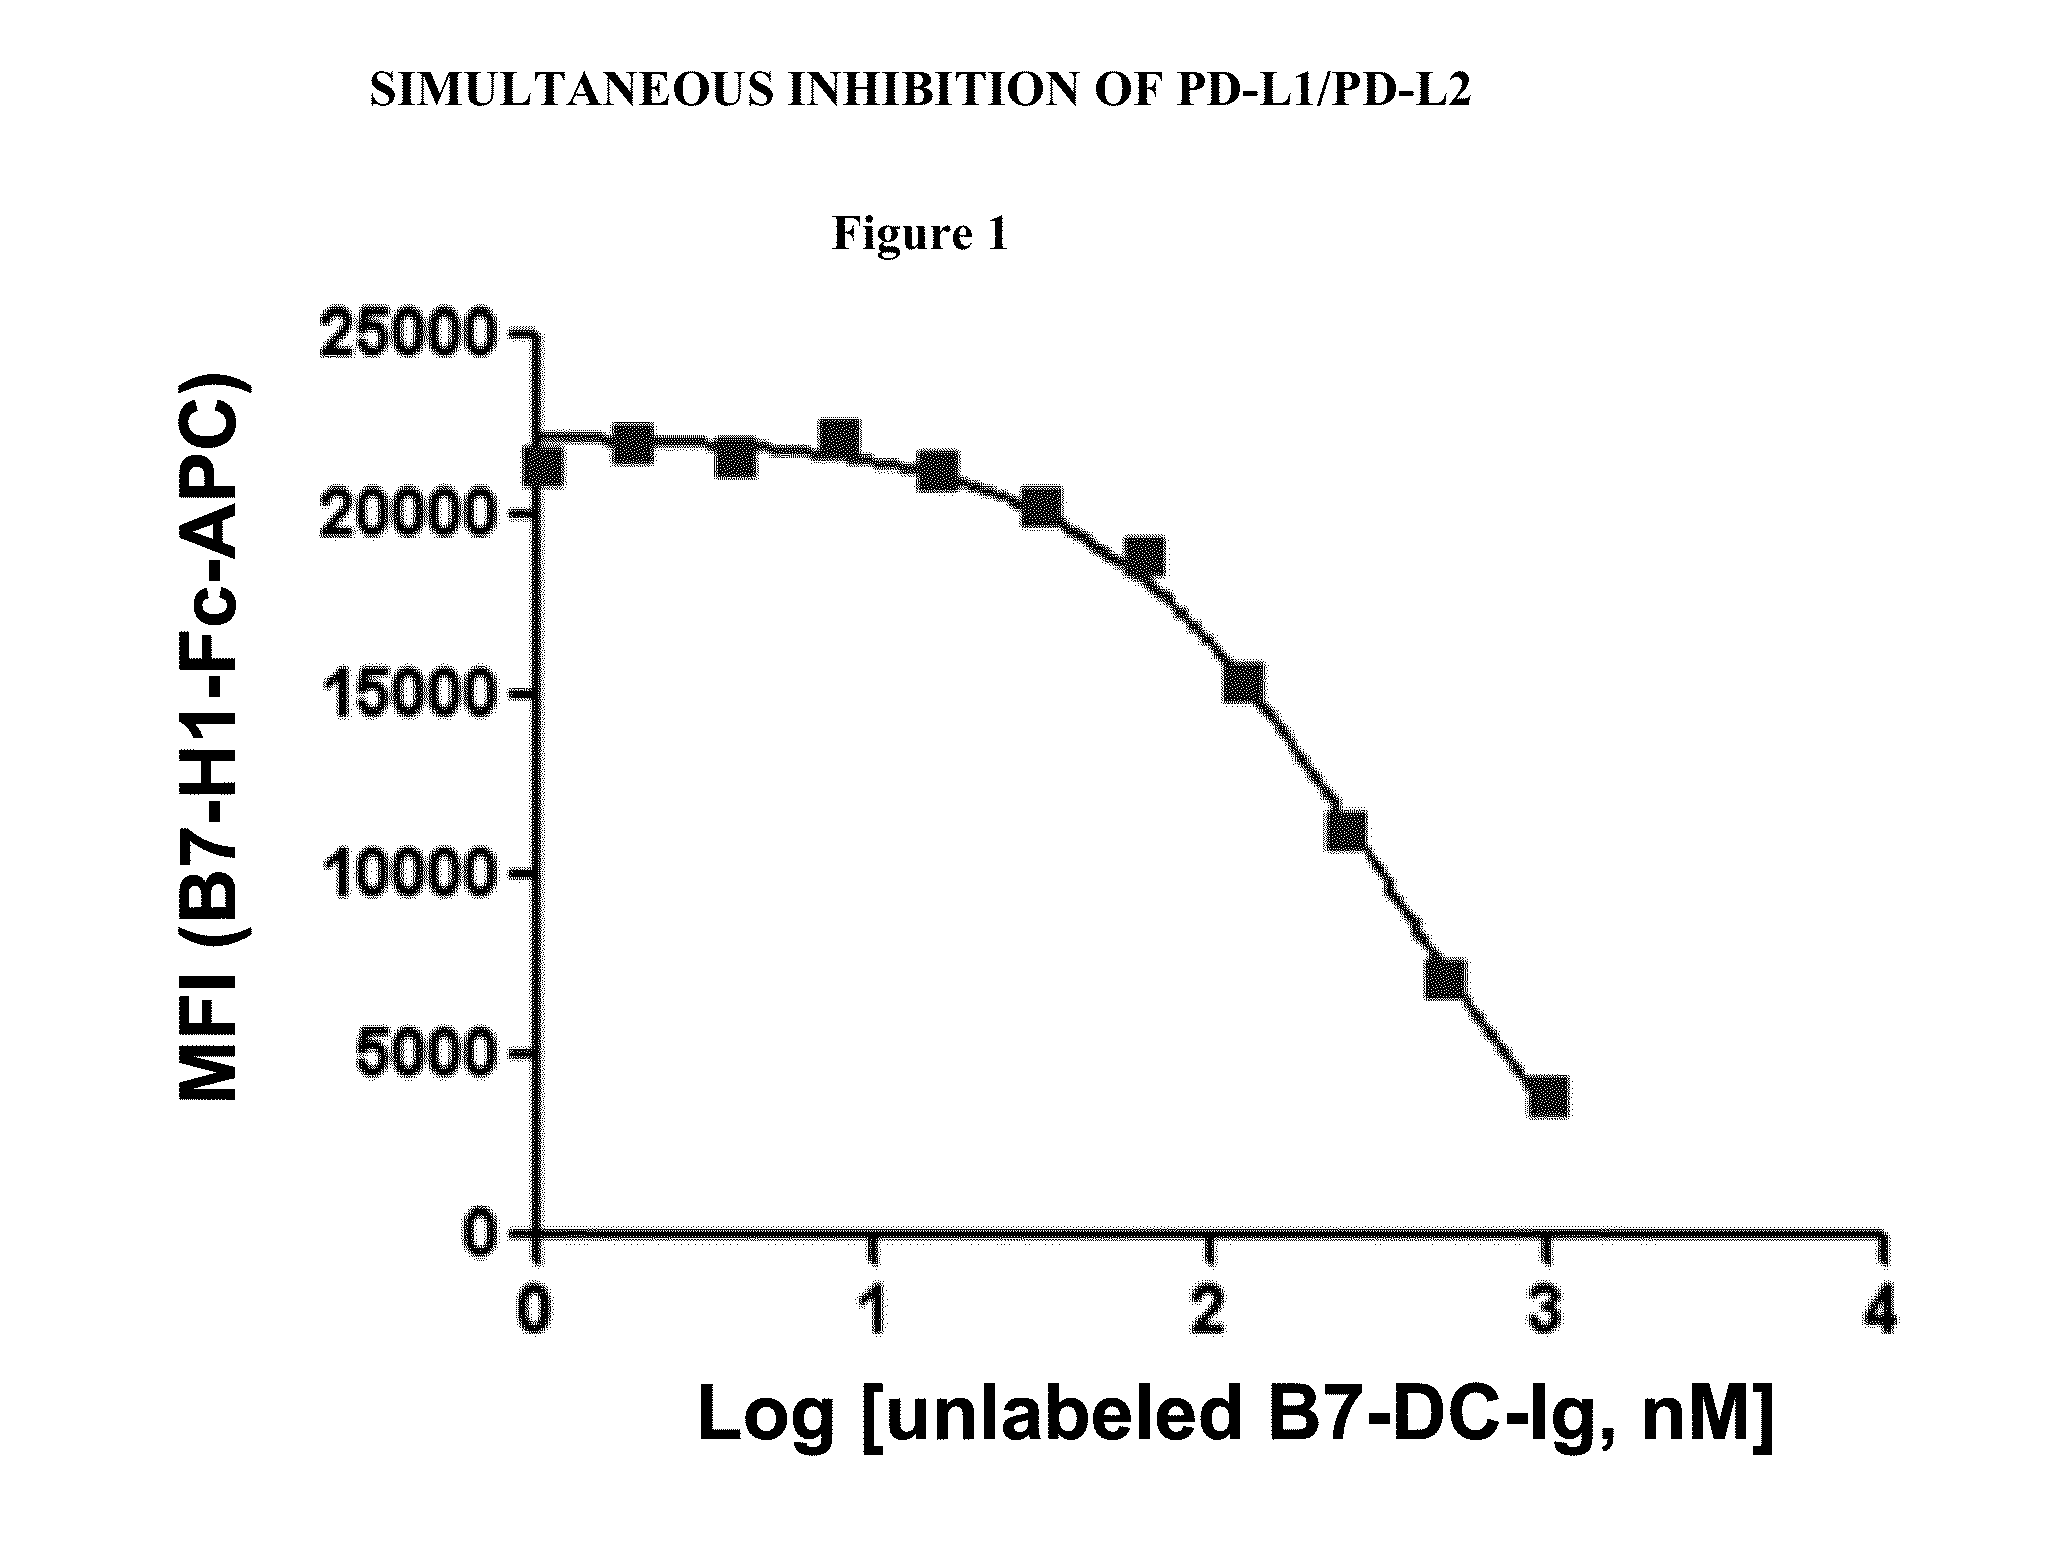 Simultaneous inhibition of pd-l1/pd-l2